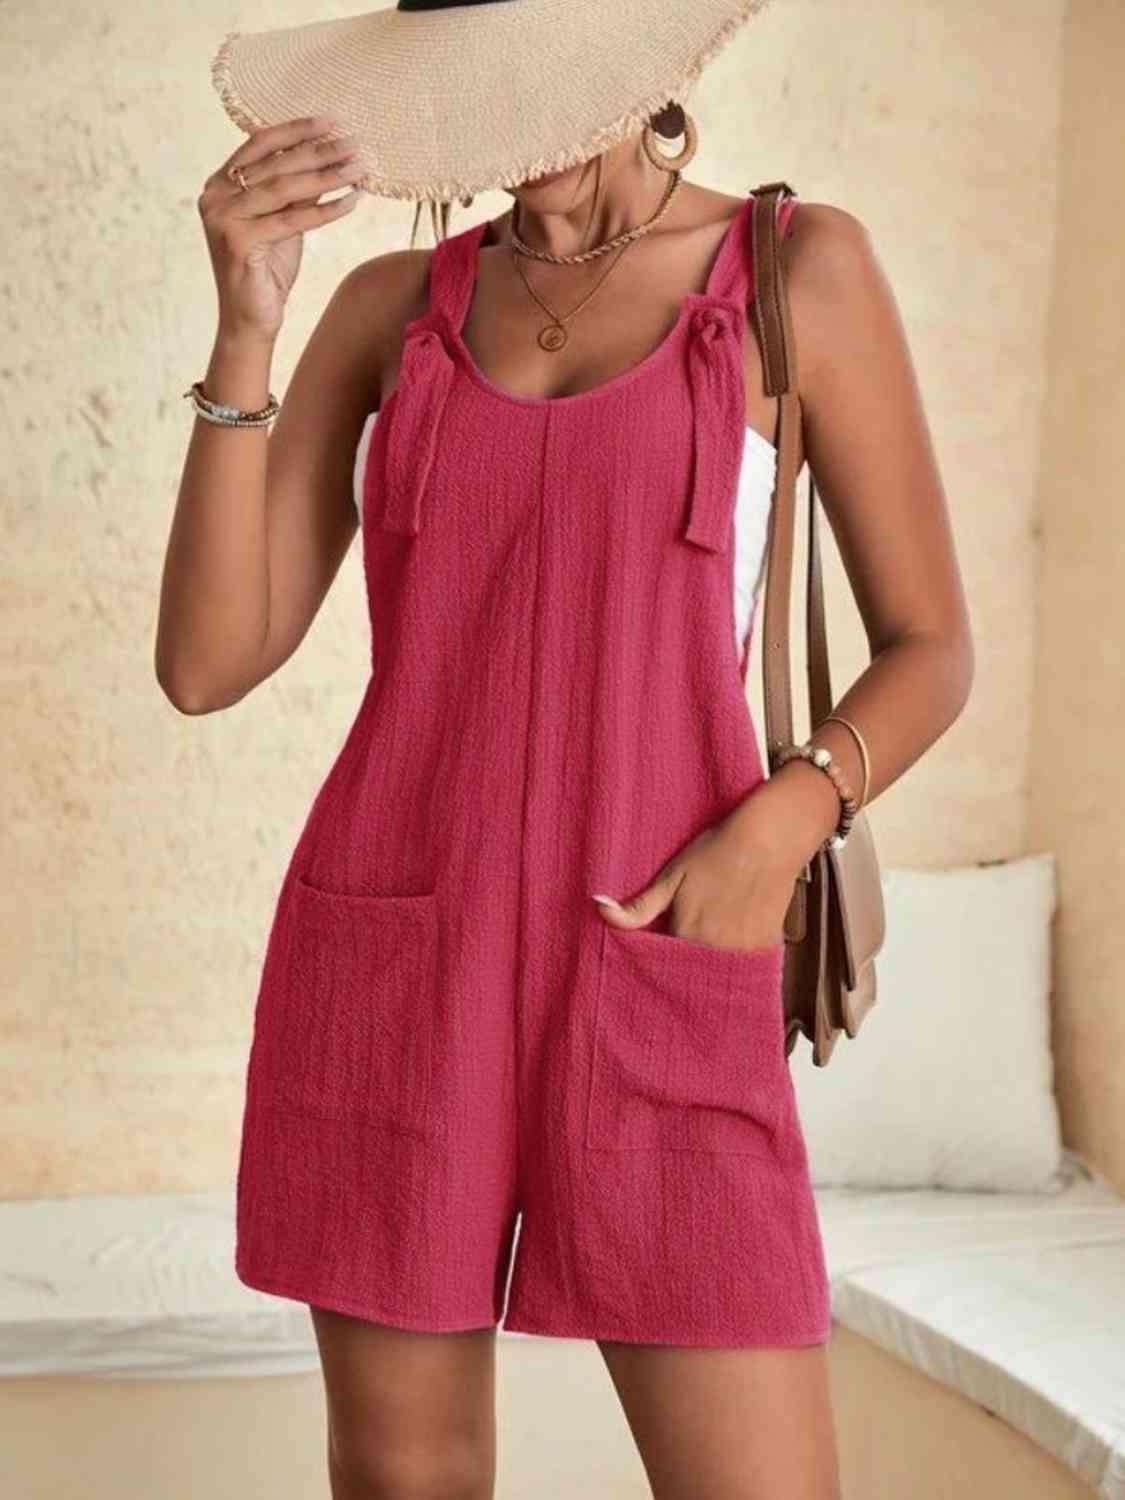 Bona Fide Fashion - Full Size Scoop Neck Romper with Pockets - Women Fashion - Bona Fide Fashion